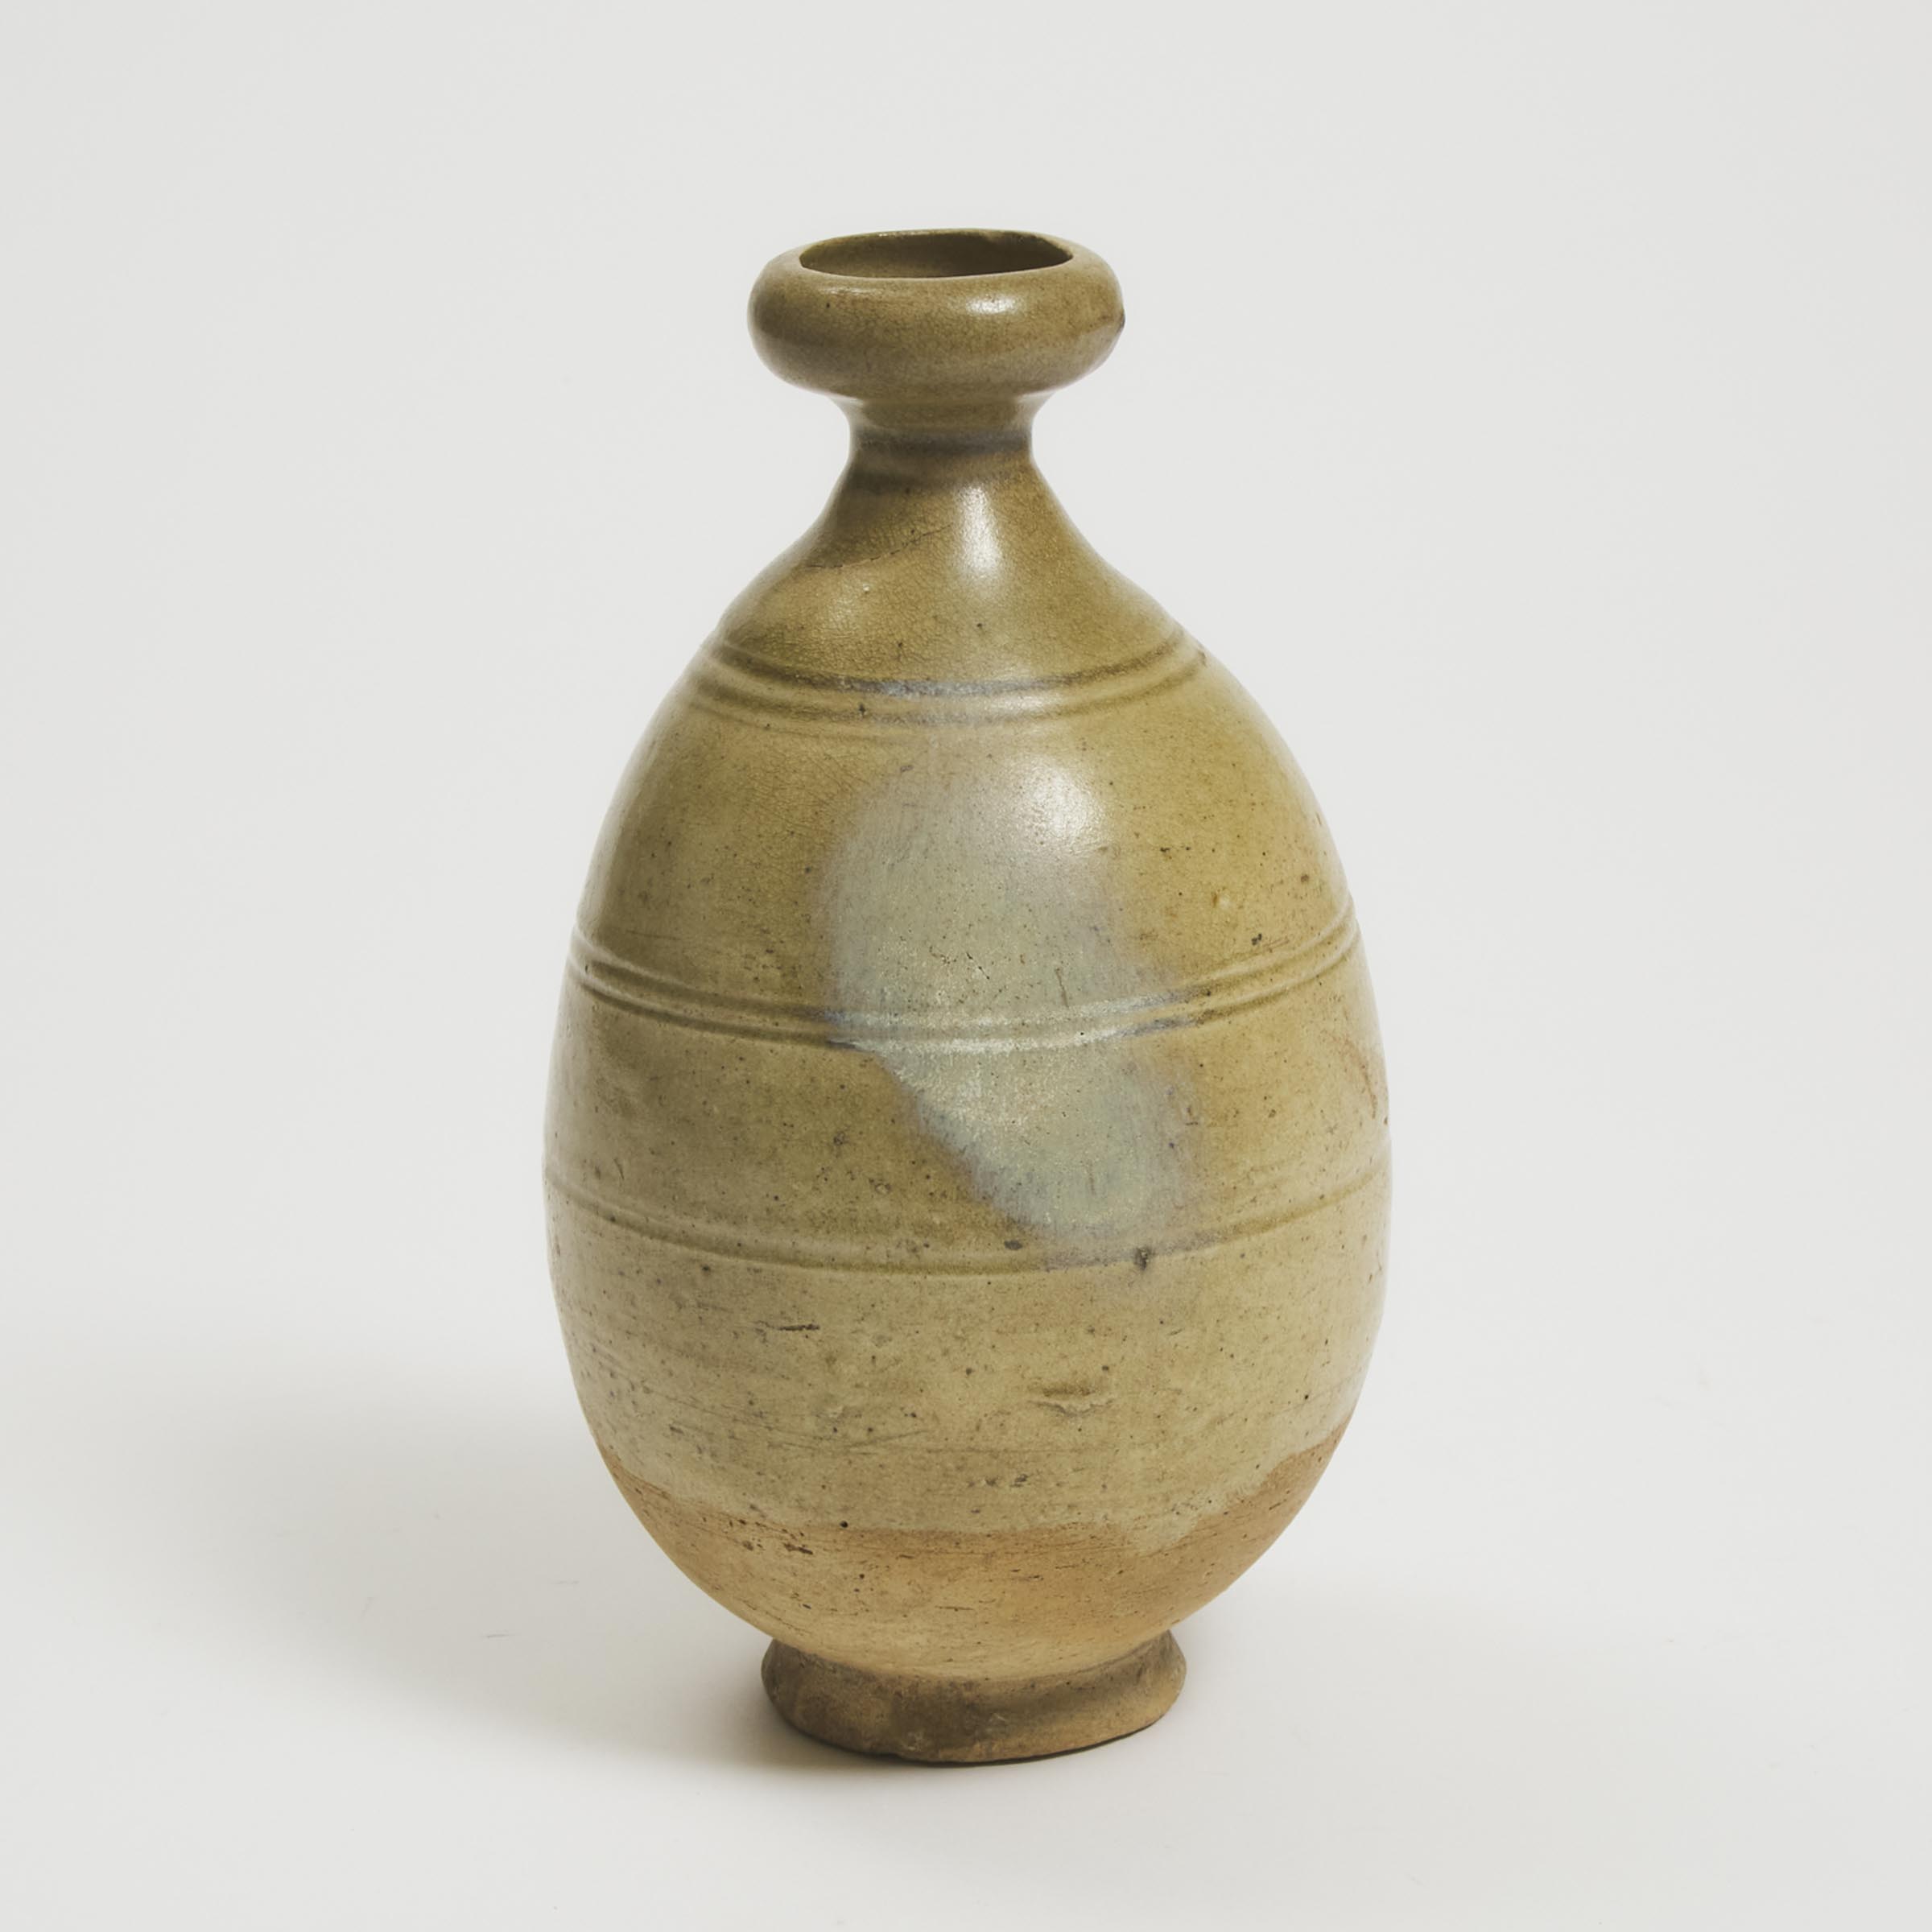 A Greenish Straw-Glazed Bottle Vase, Sui/Tang Dynasty (AD 581-907)